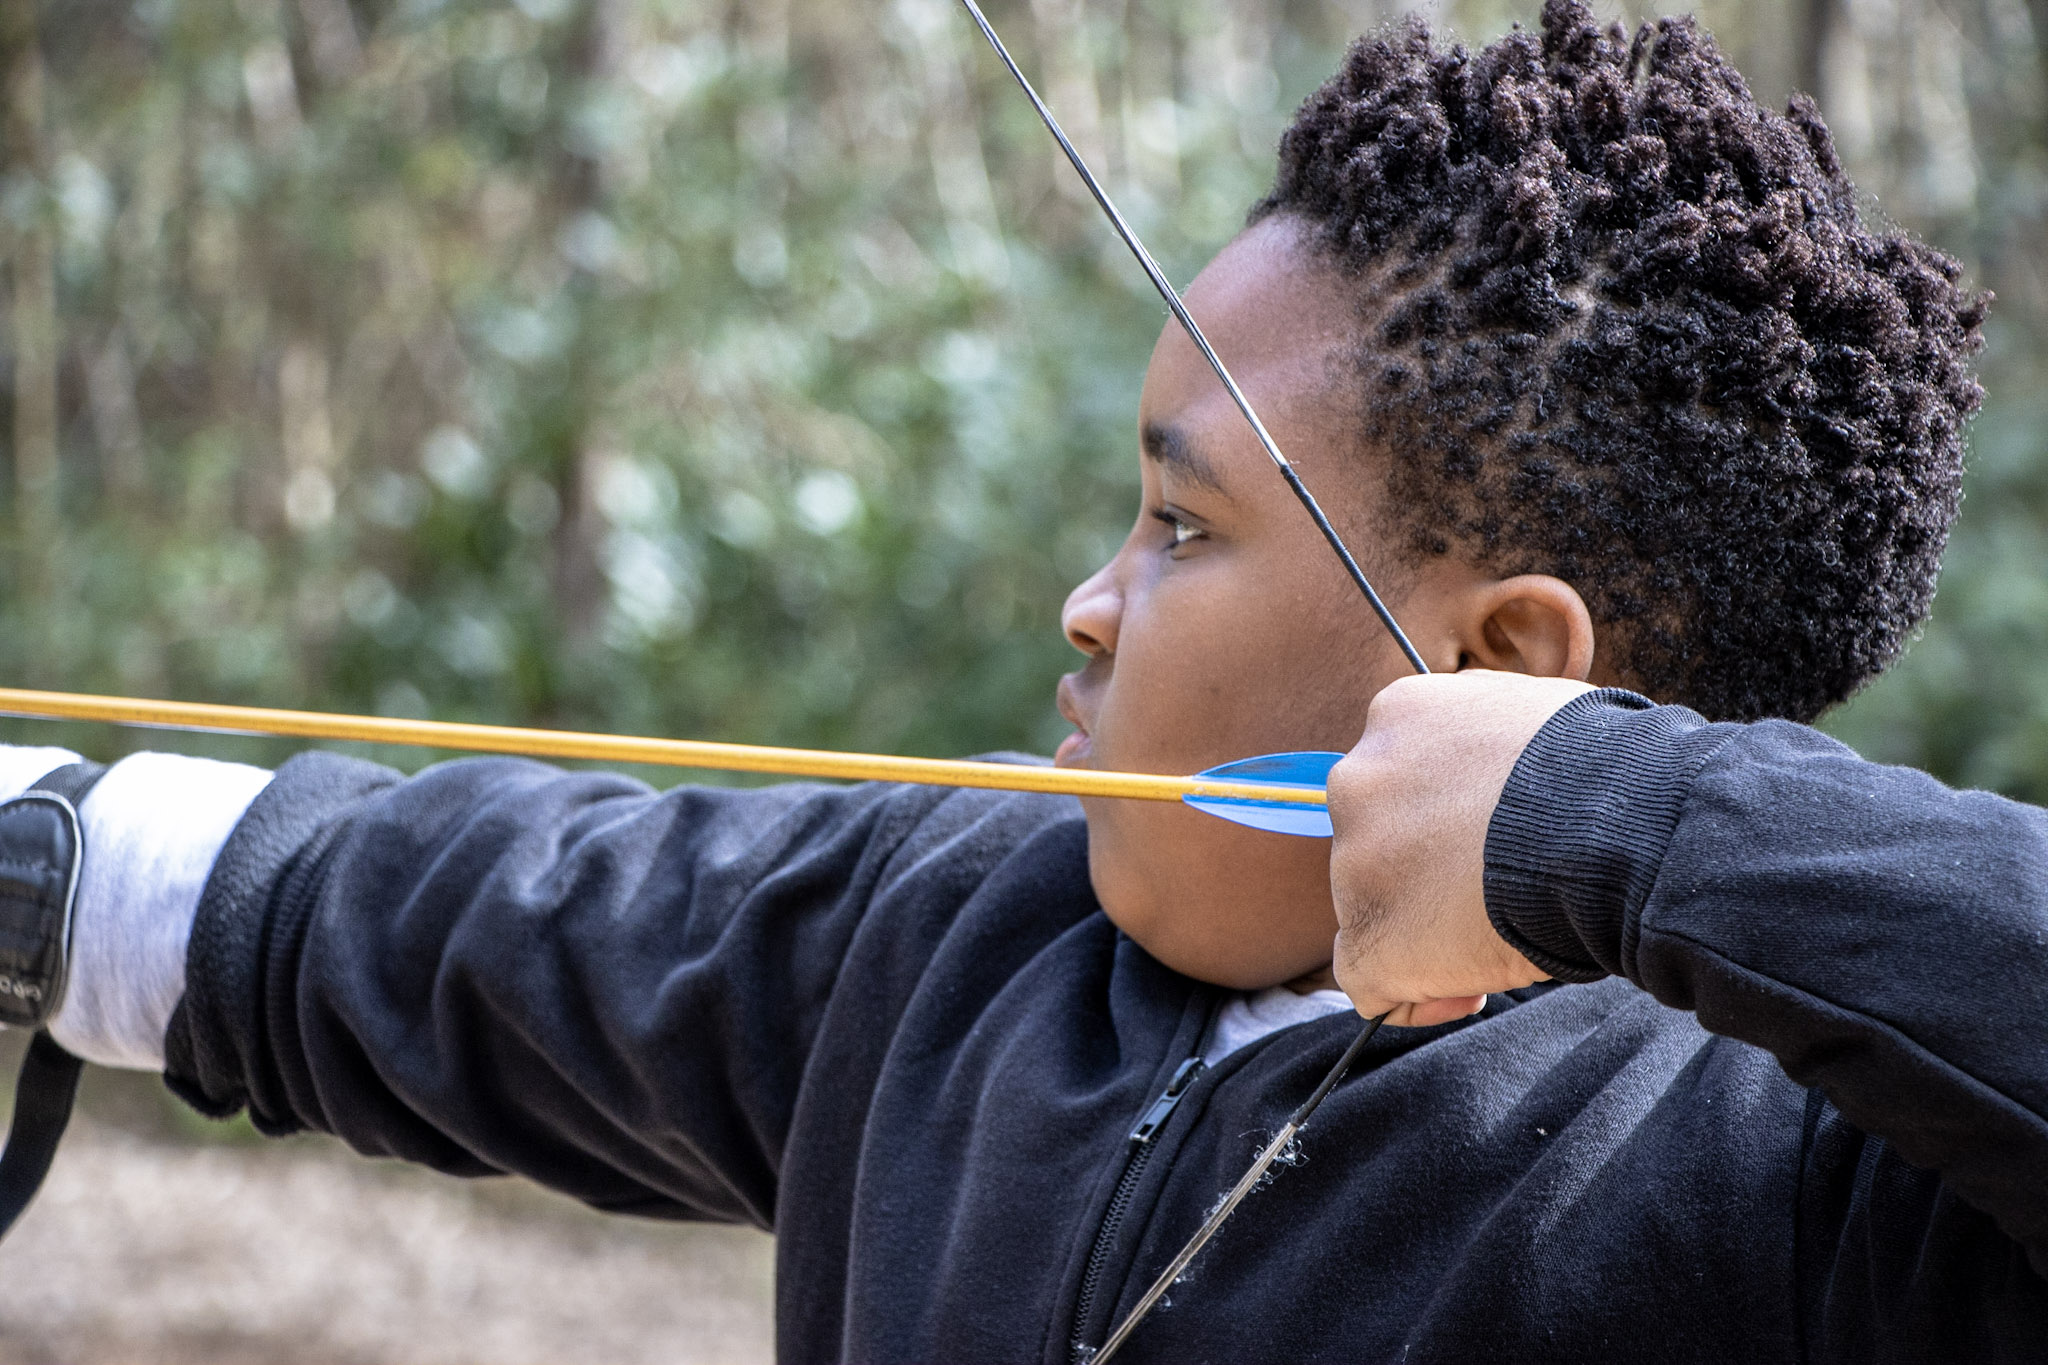 A boy enjoying a Family Archery session